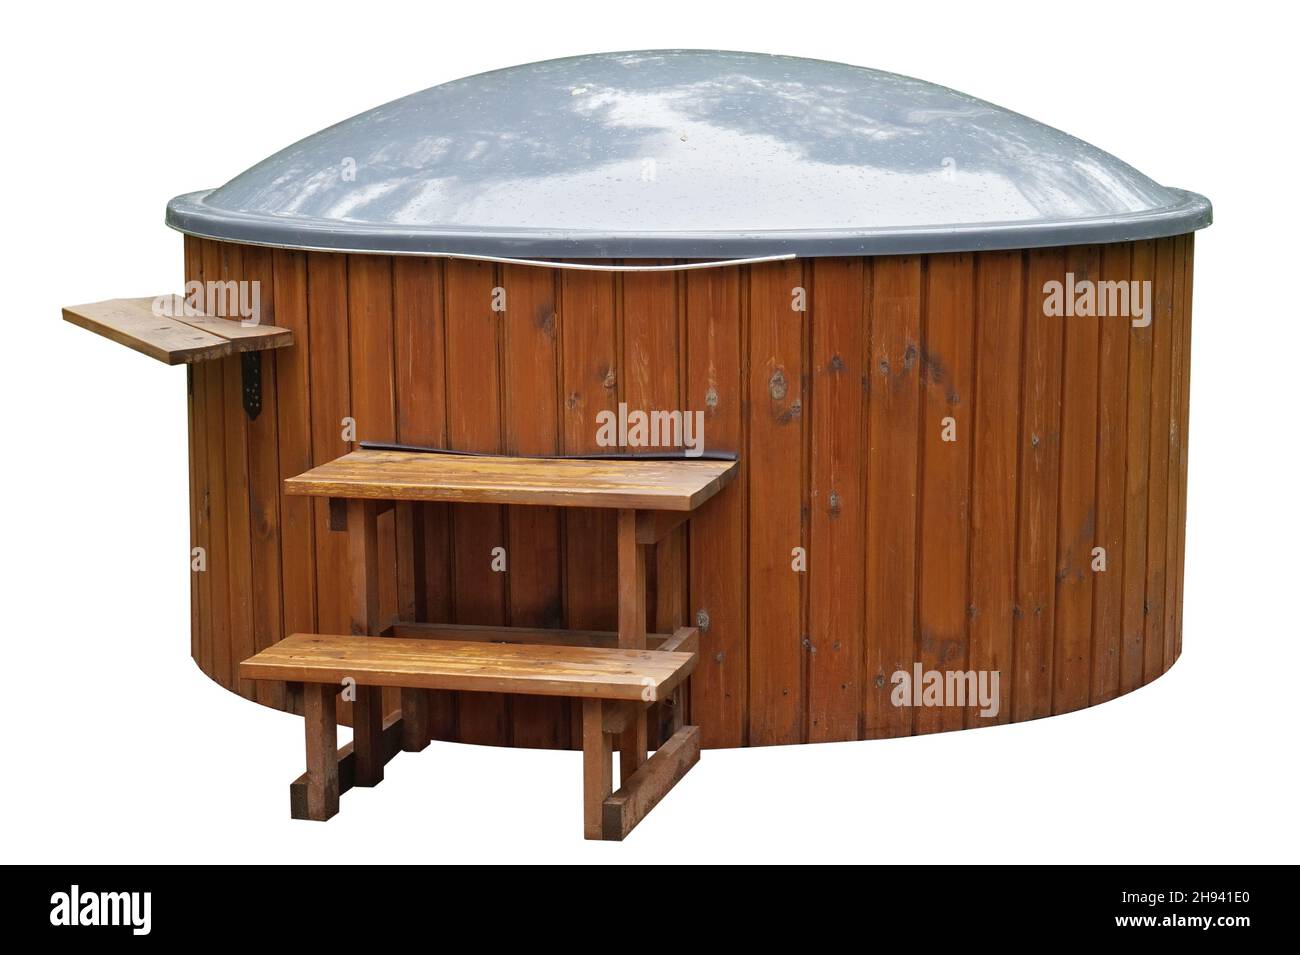 Baño de estilo japonés - barril de madera con agua caliente. Aislado sobre blanco Foto de stock